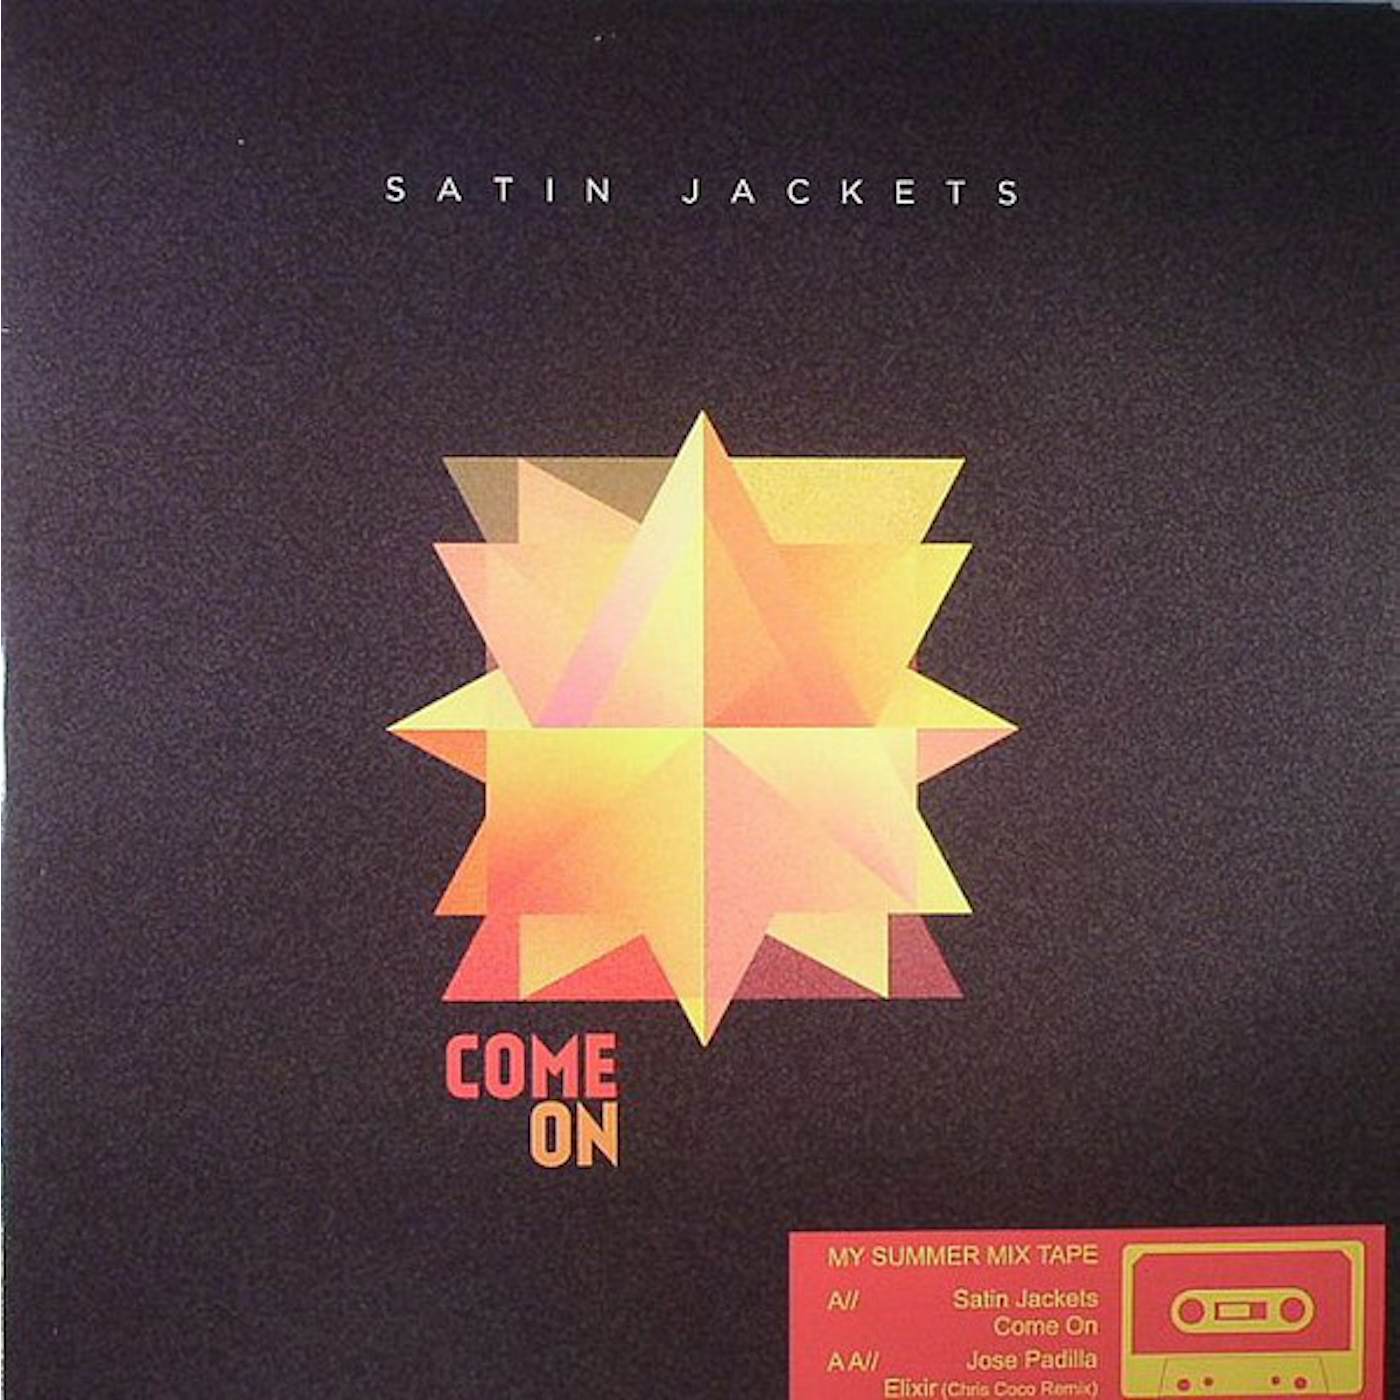 COME ON/ELIXIR (CHRIS COCO REMIX) / VARIOUS Vinyl Record - UK Release